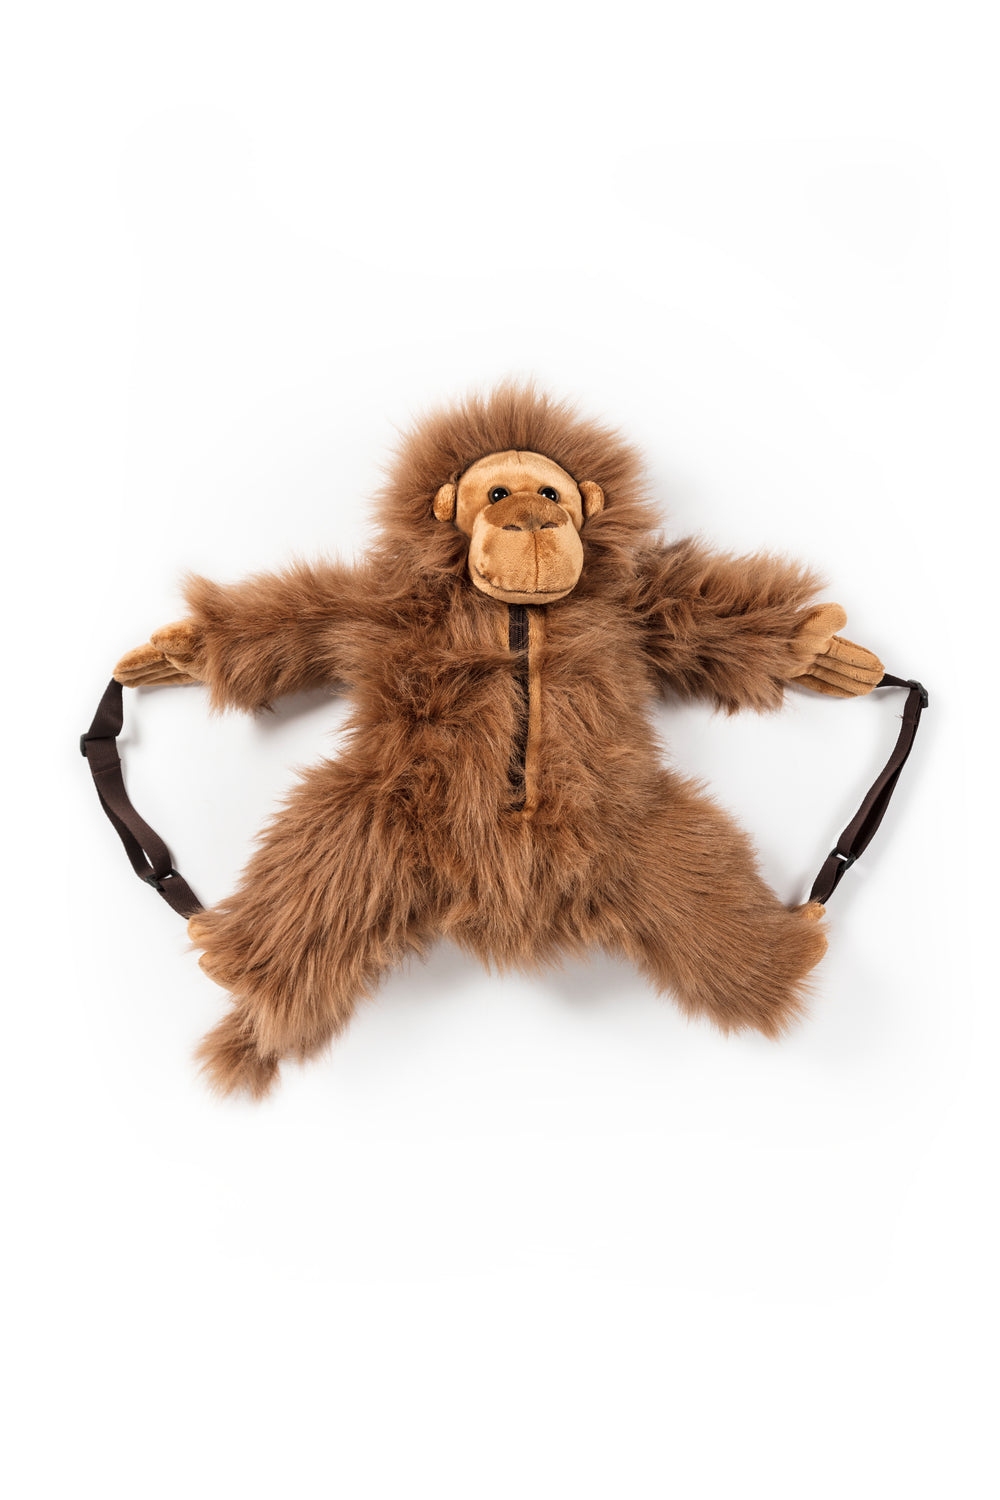 Backpack monkey